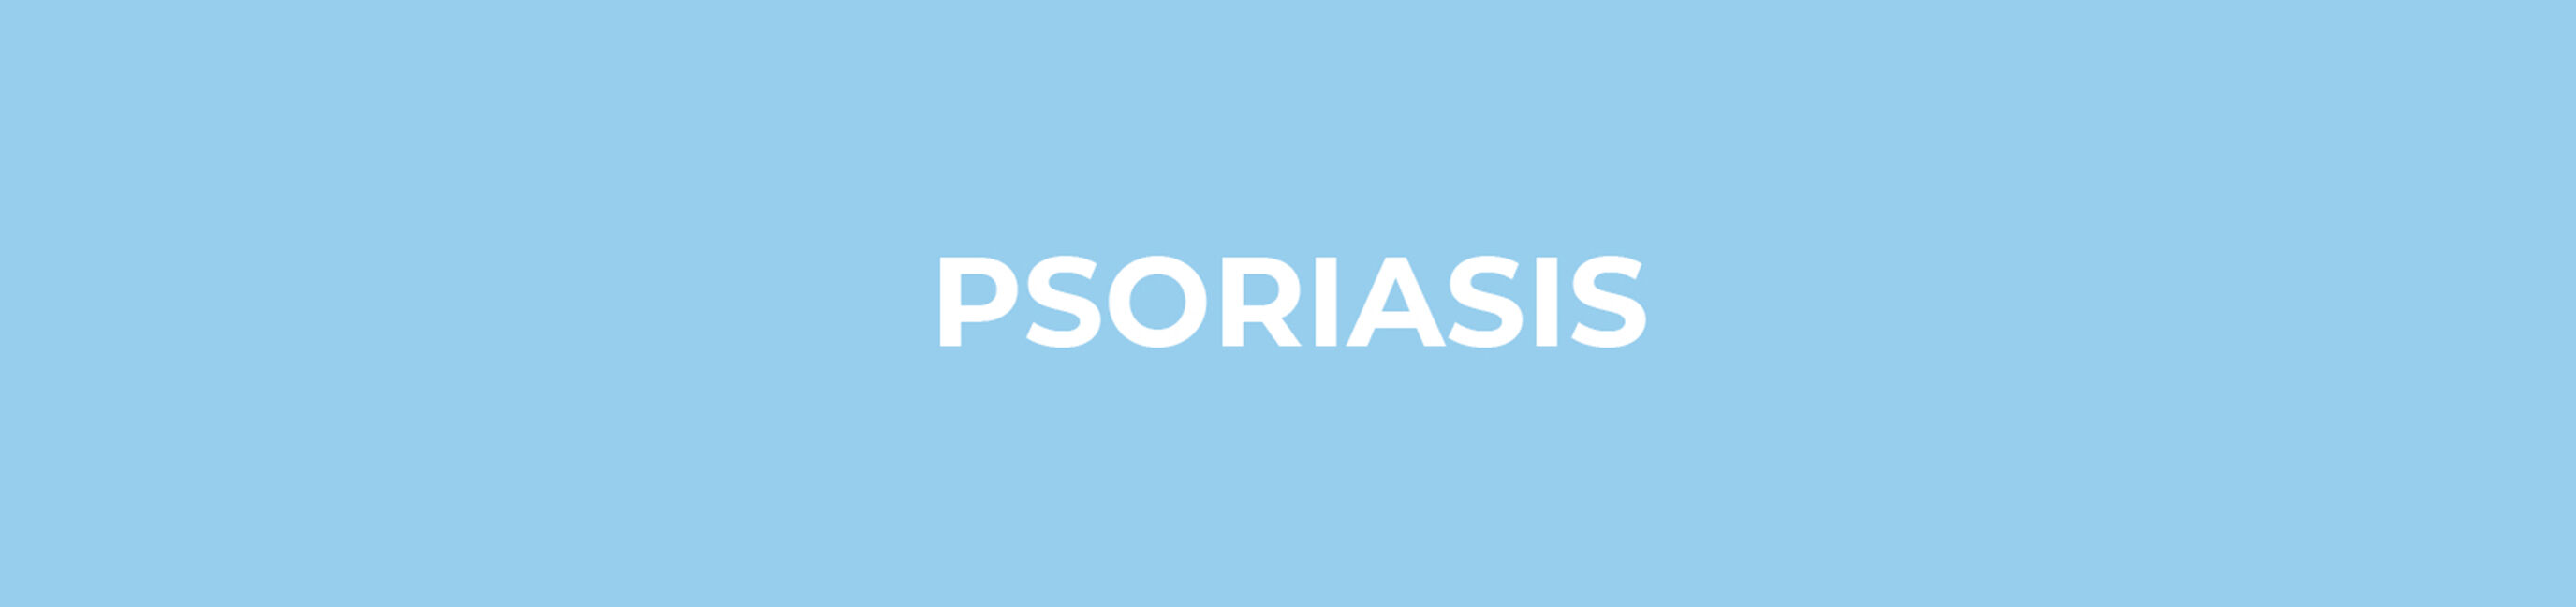 004 psoriasis new